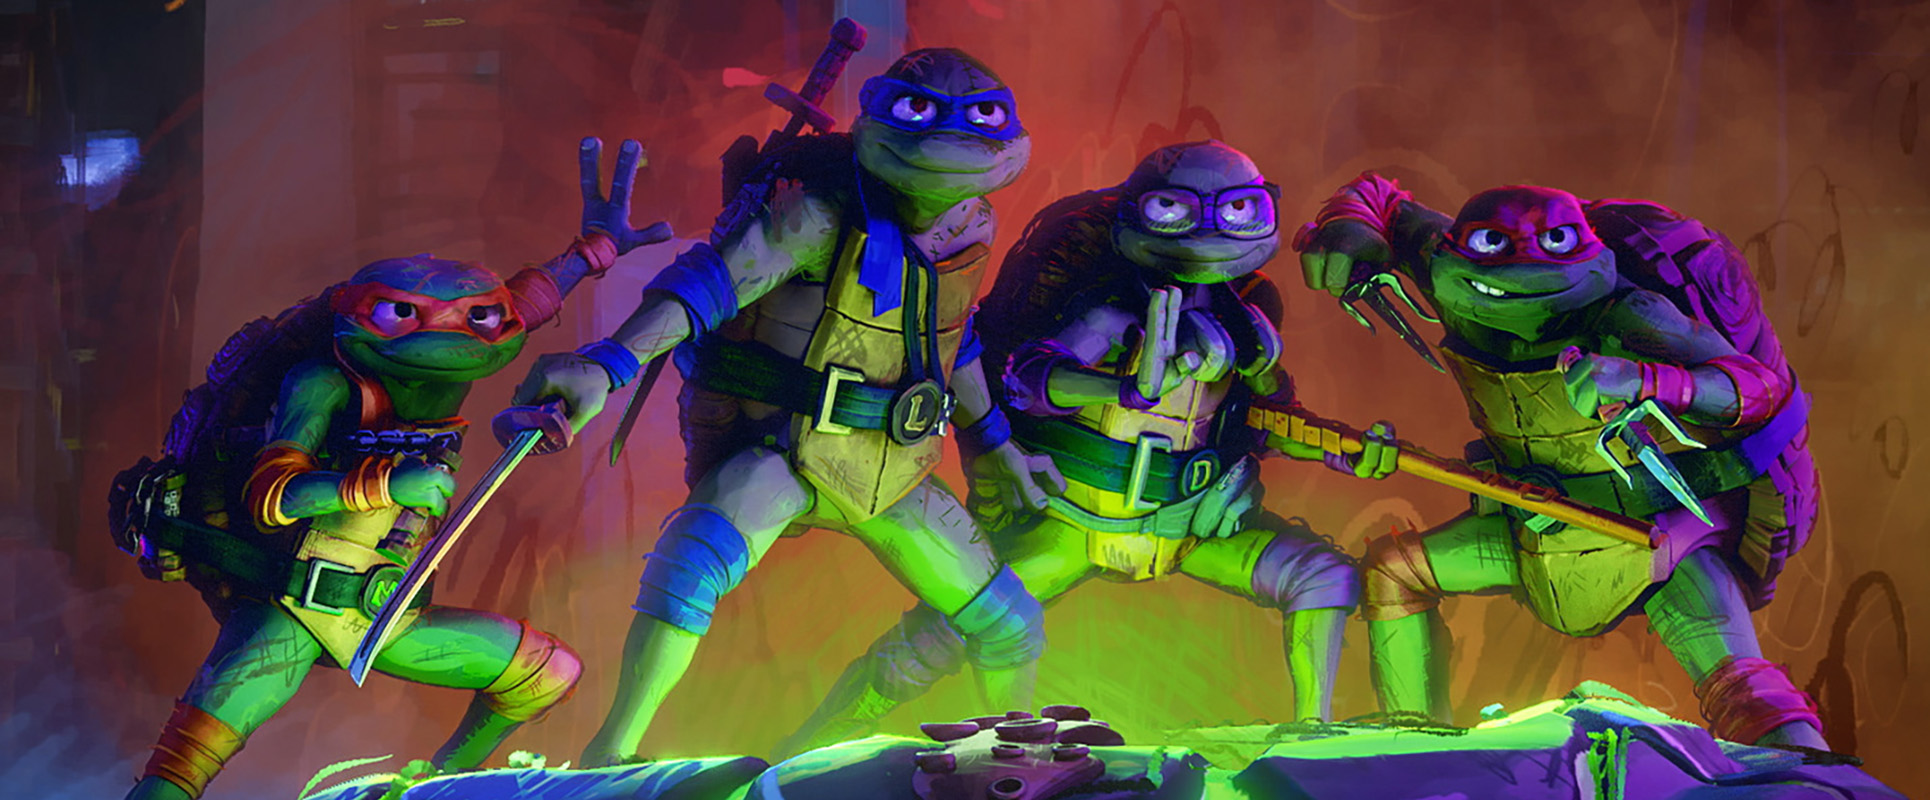 Teenage Mutant Ninja Turtles: Mutant Mayhem - Which Turtle Are You?